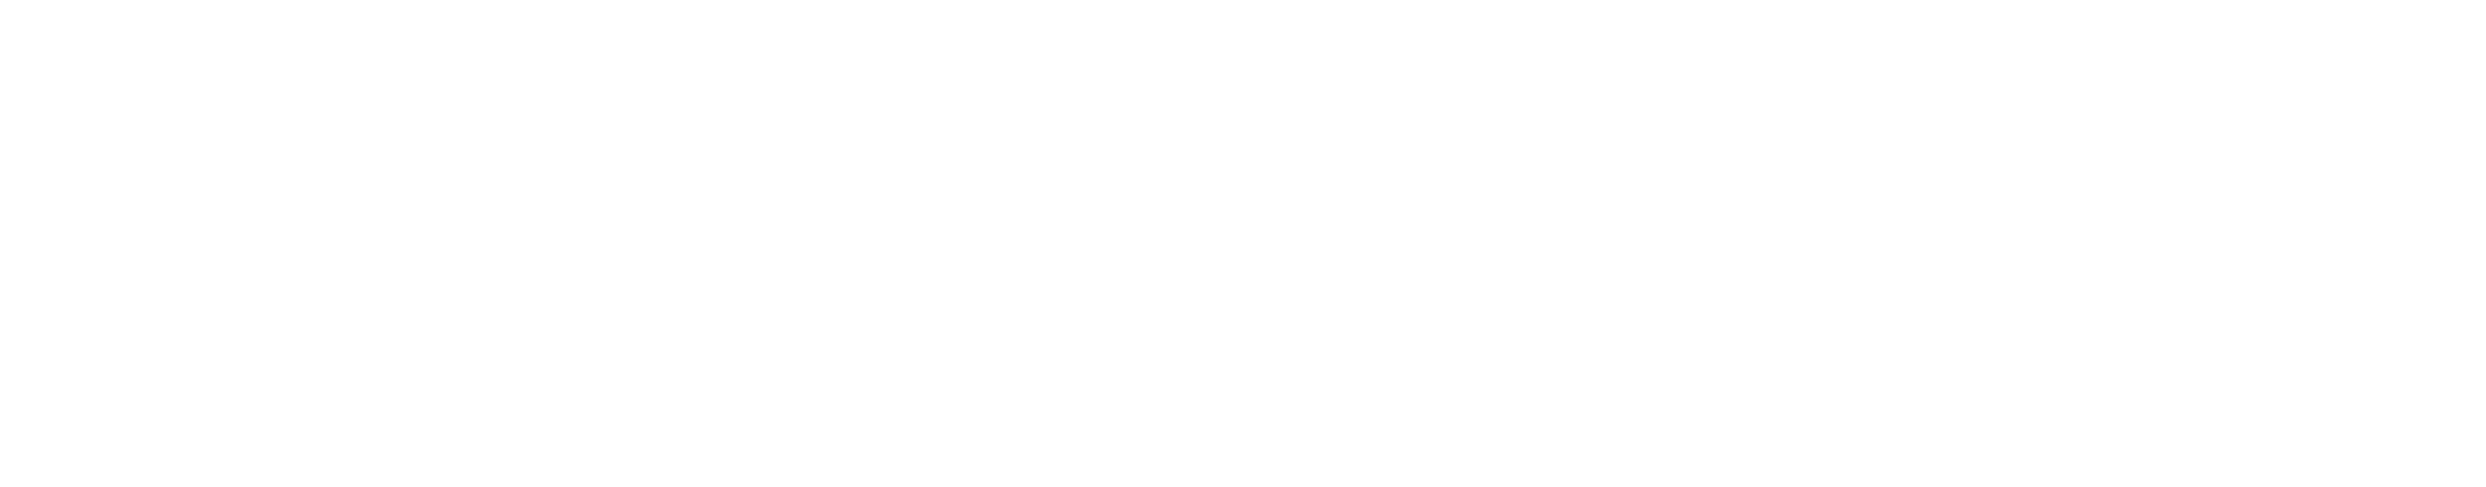 Weinzapfel Wealth Advisors, Inc.